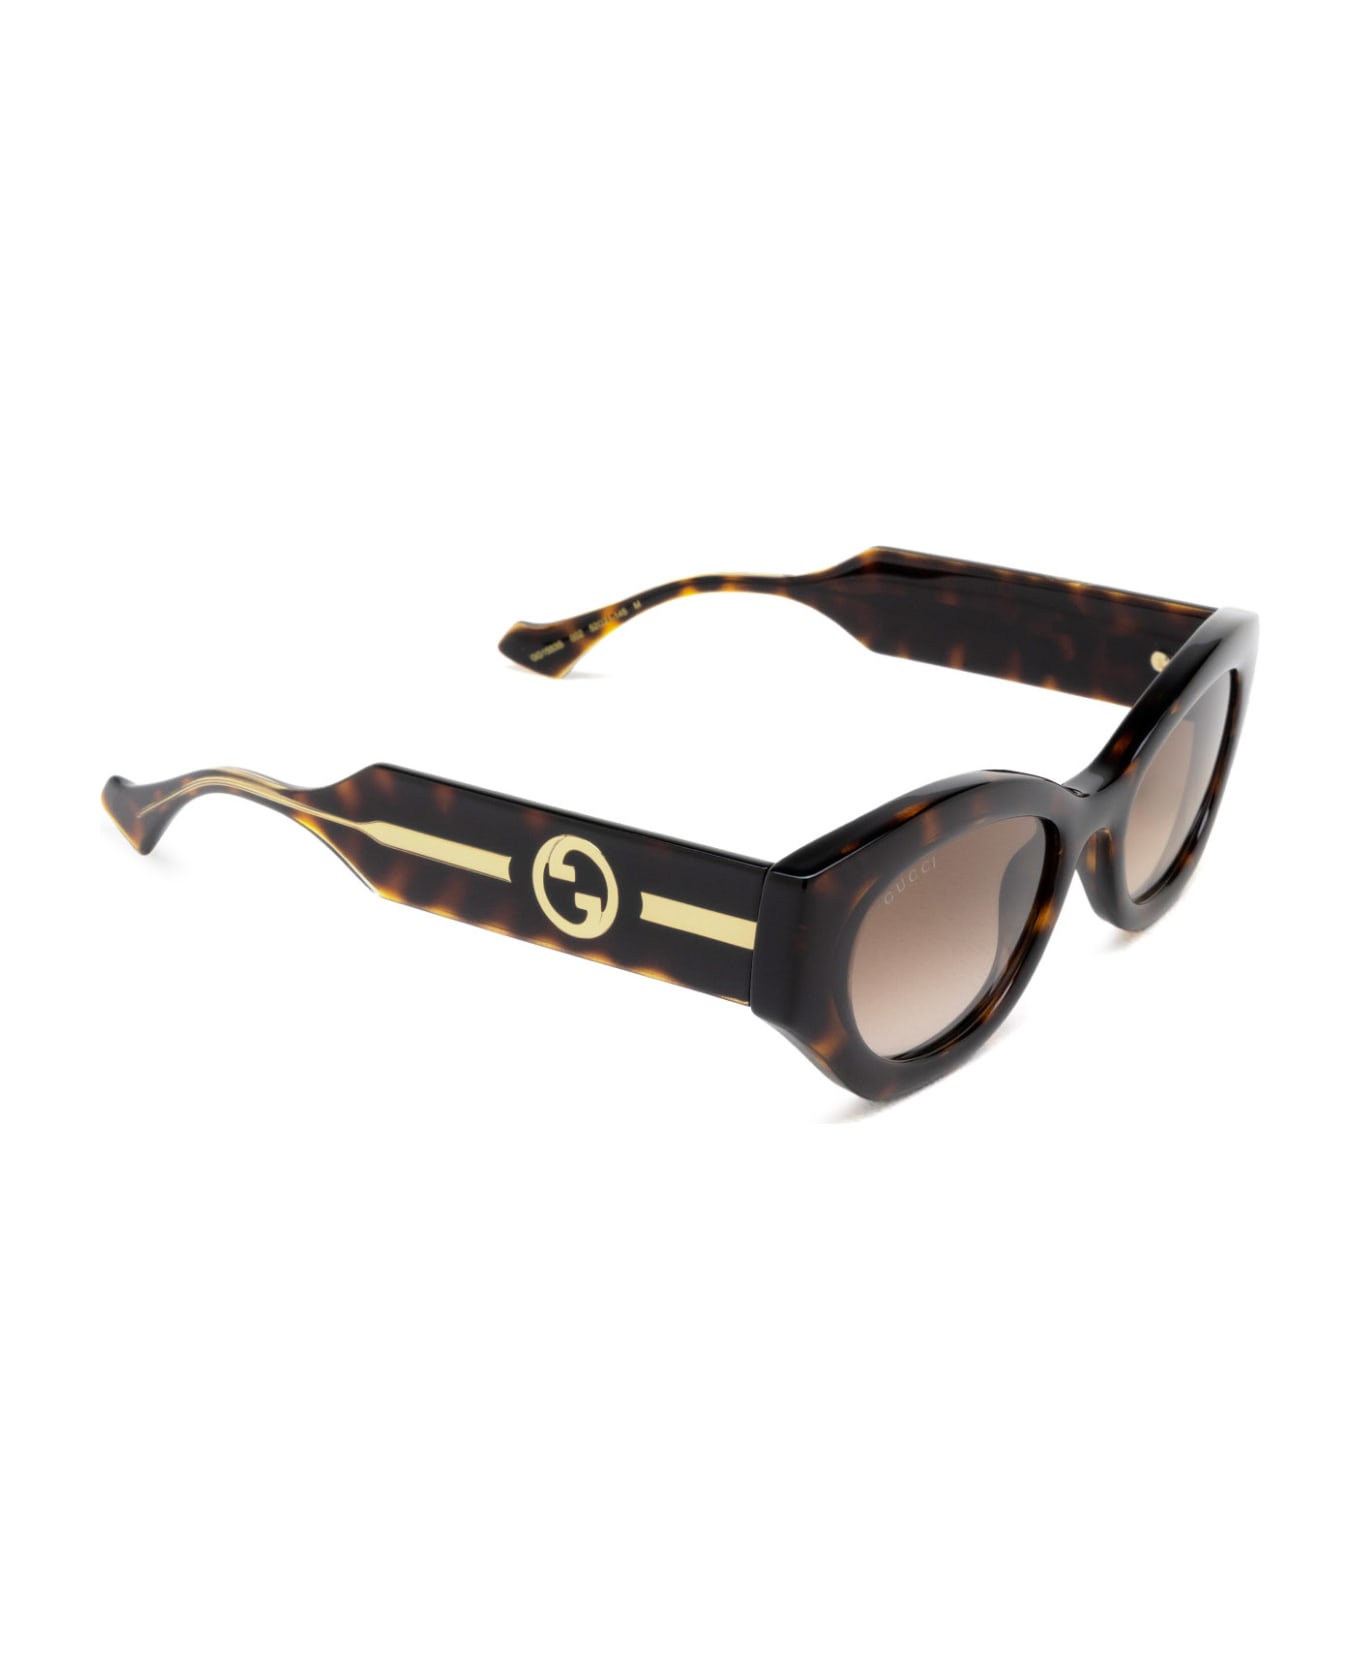 Gucci Eyewear Gg1553s Havana Sunglasses - Havana サングラス